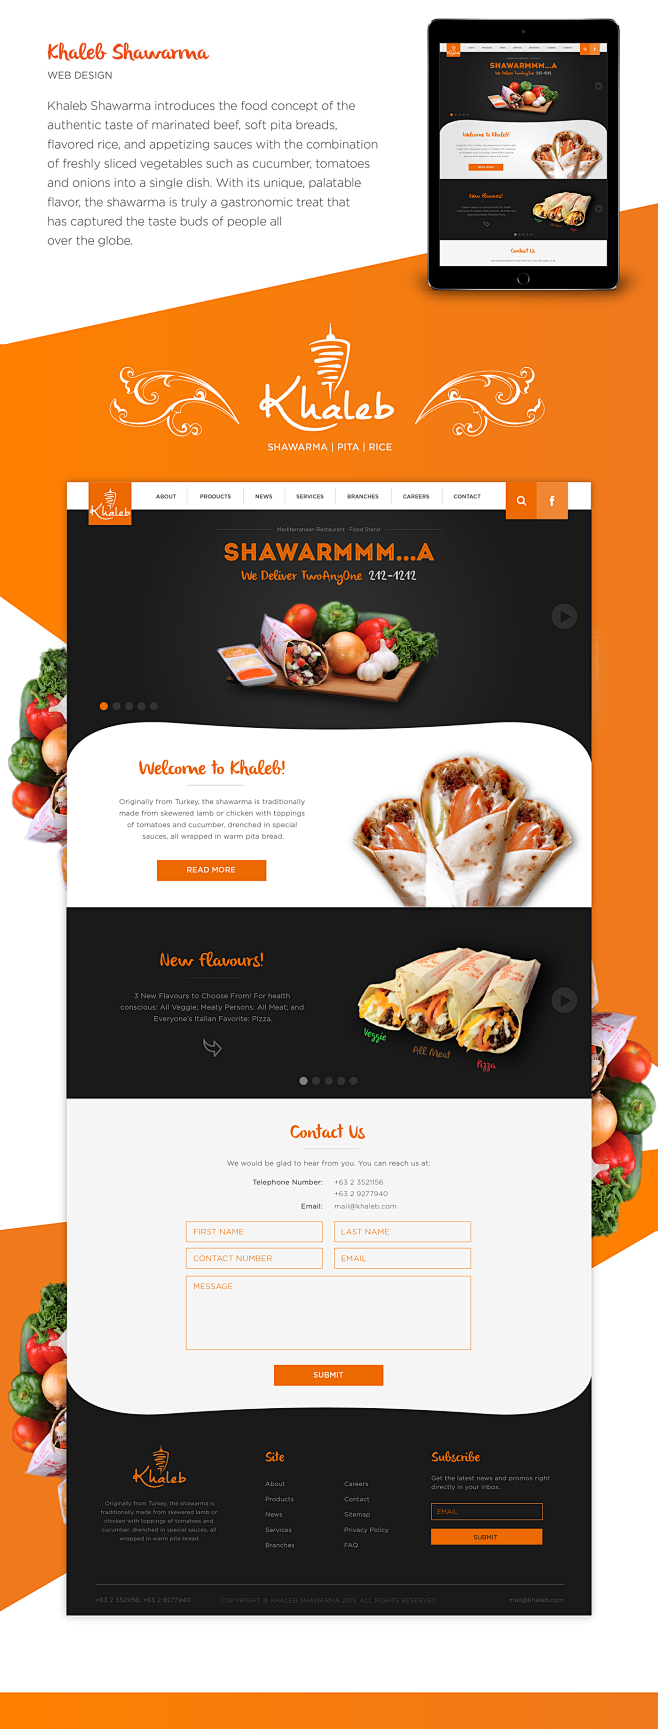 Khaleb Shawarma Web ...